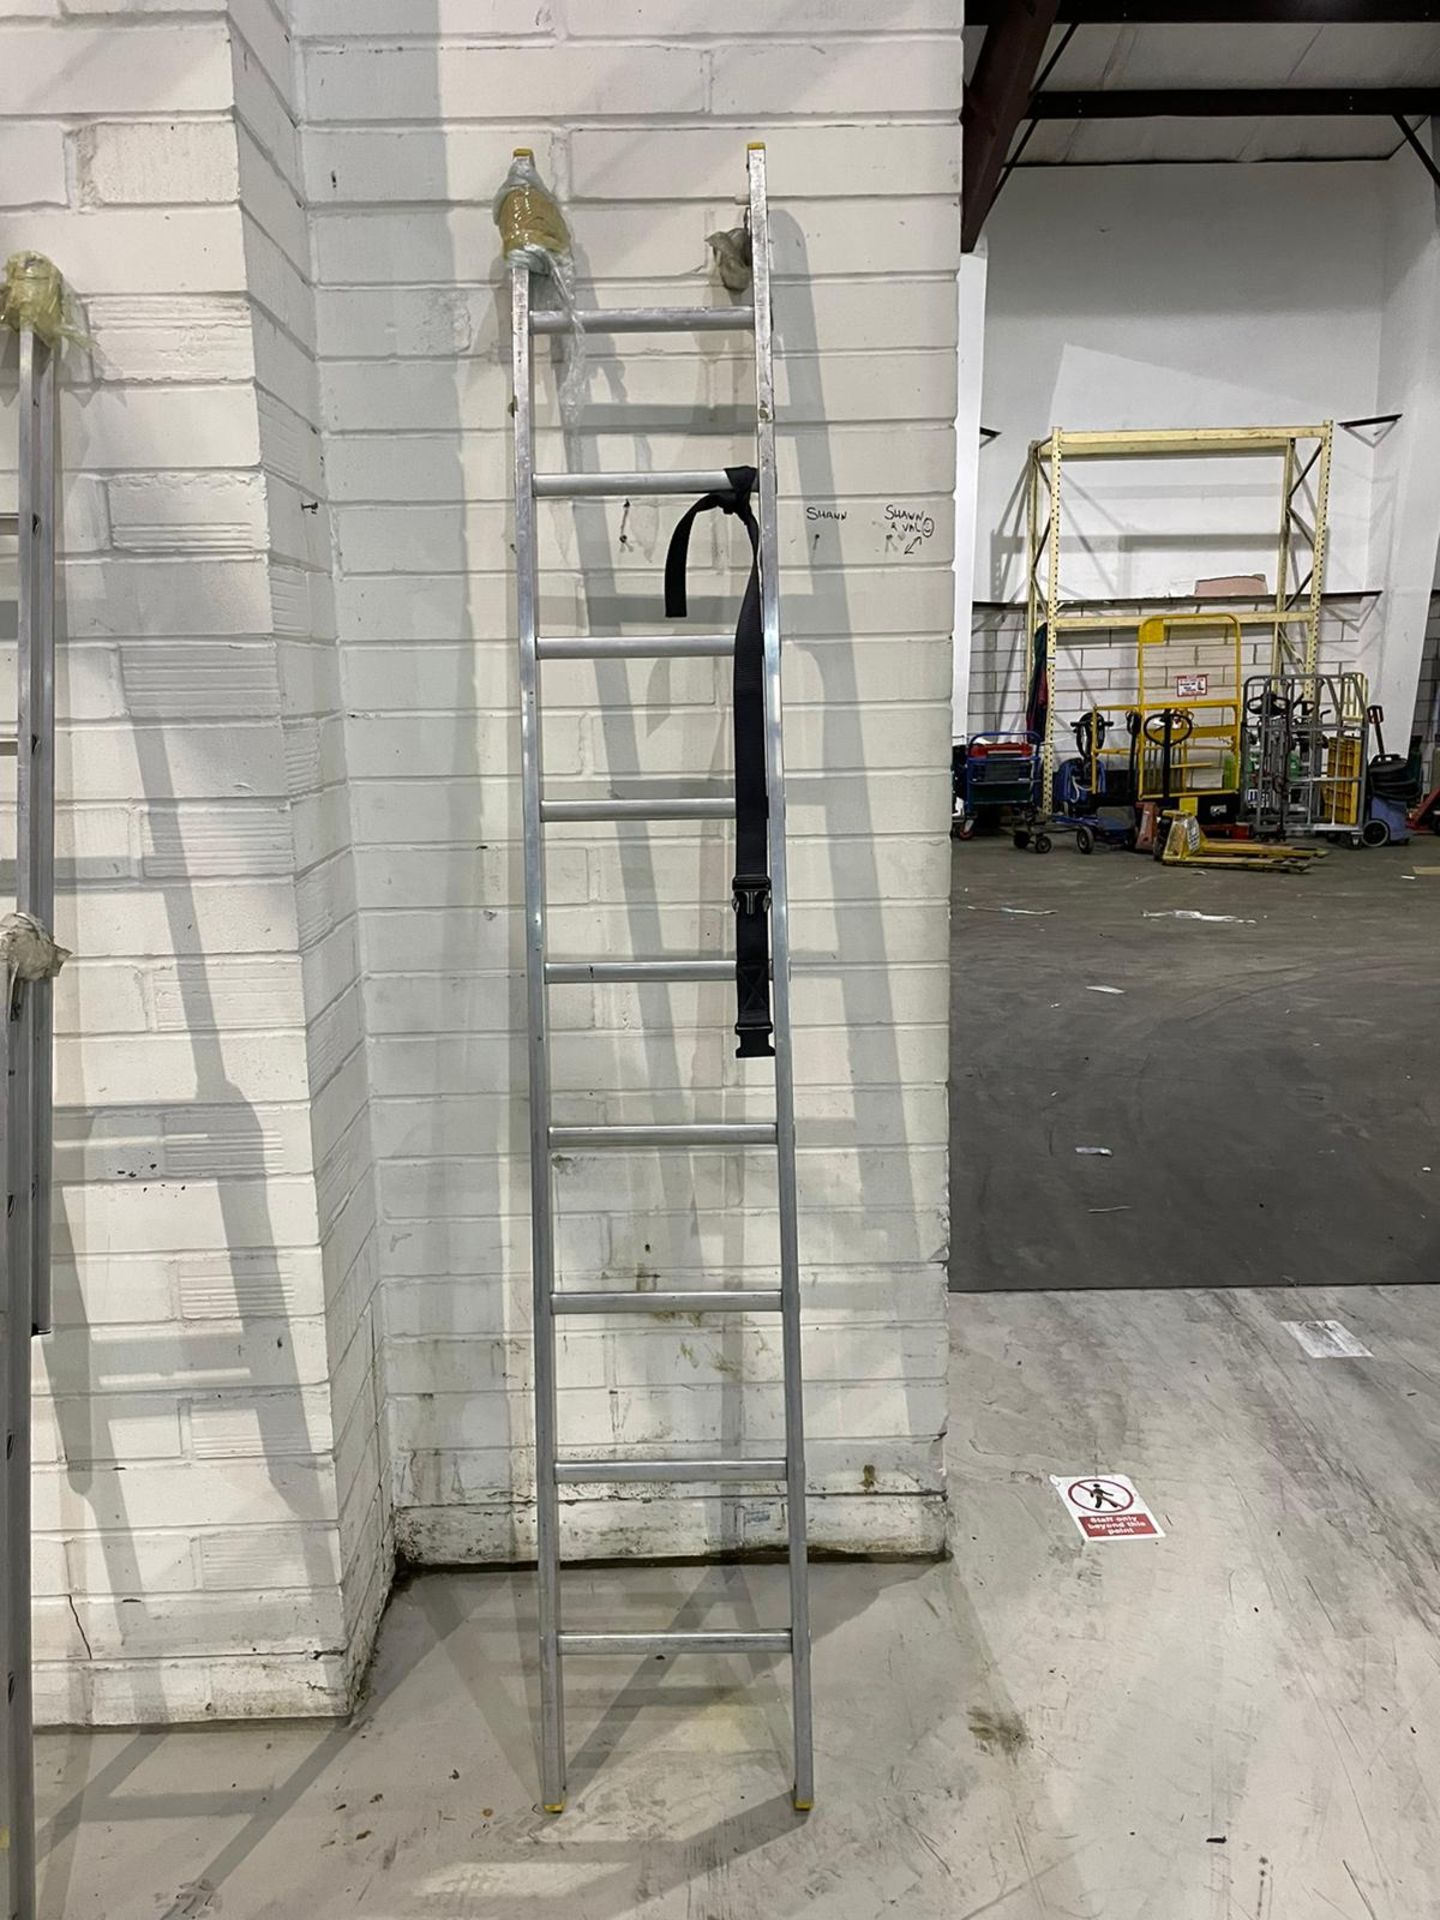 (1) Aluminium Nine Rung Step Ladder